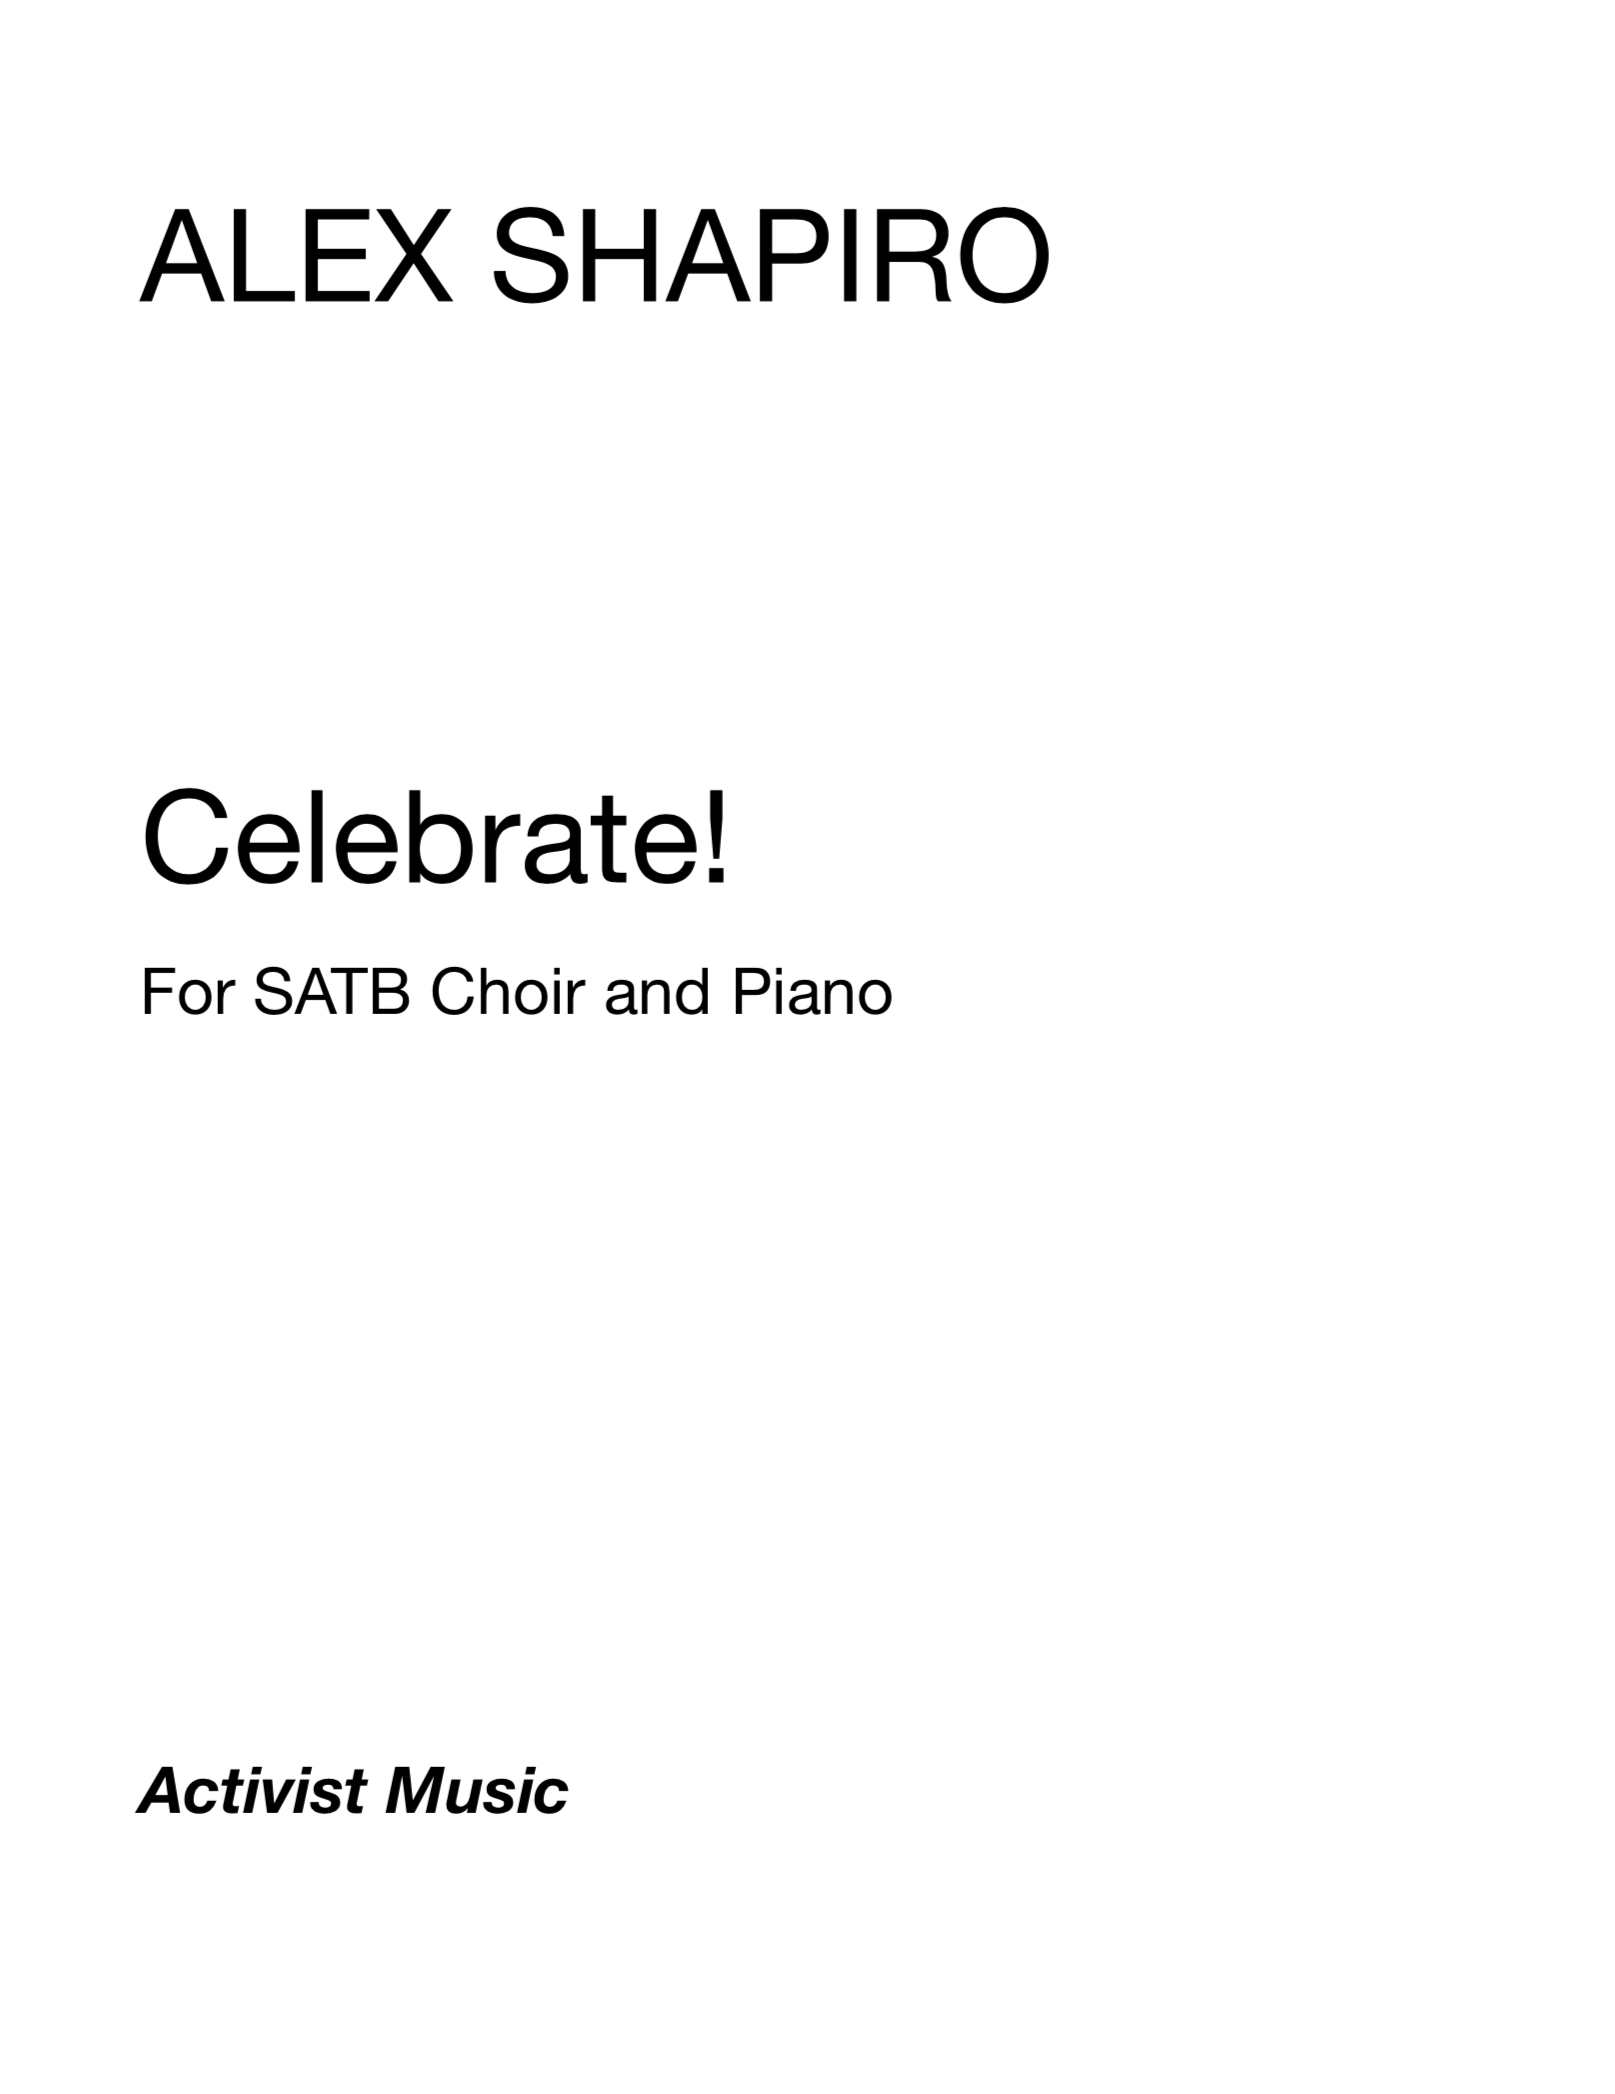 Celebrate! by Alex Shapiro